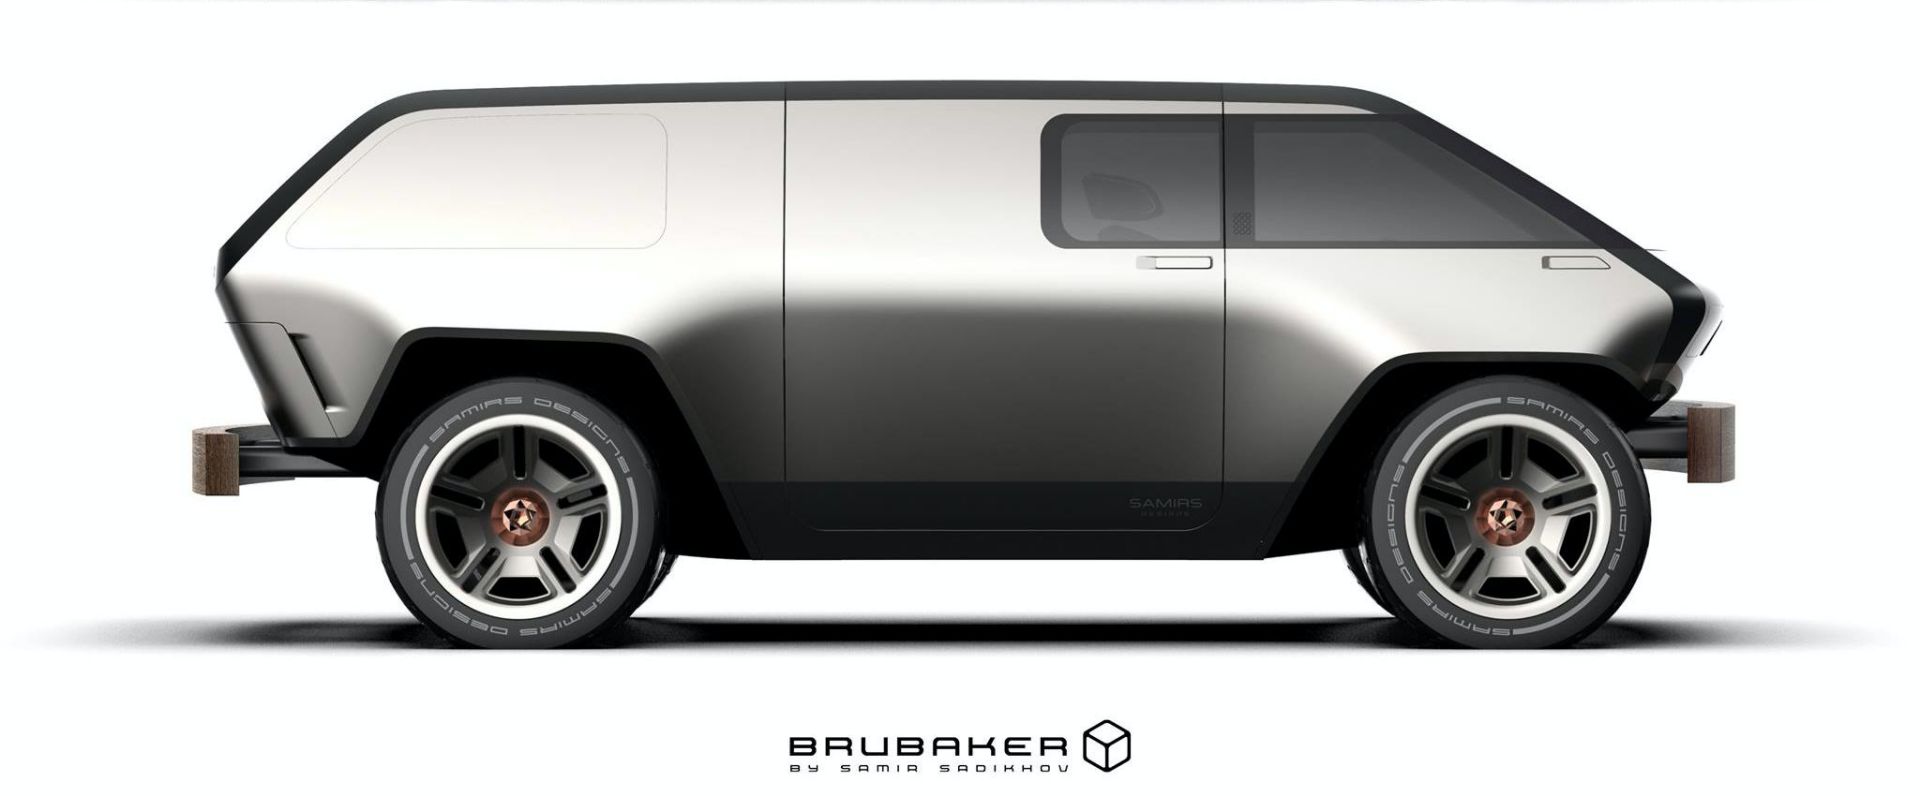 Entrepreneurs plan to launch Brubaker Box reproduction kits - Autoblog